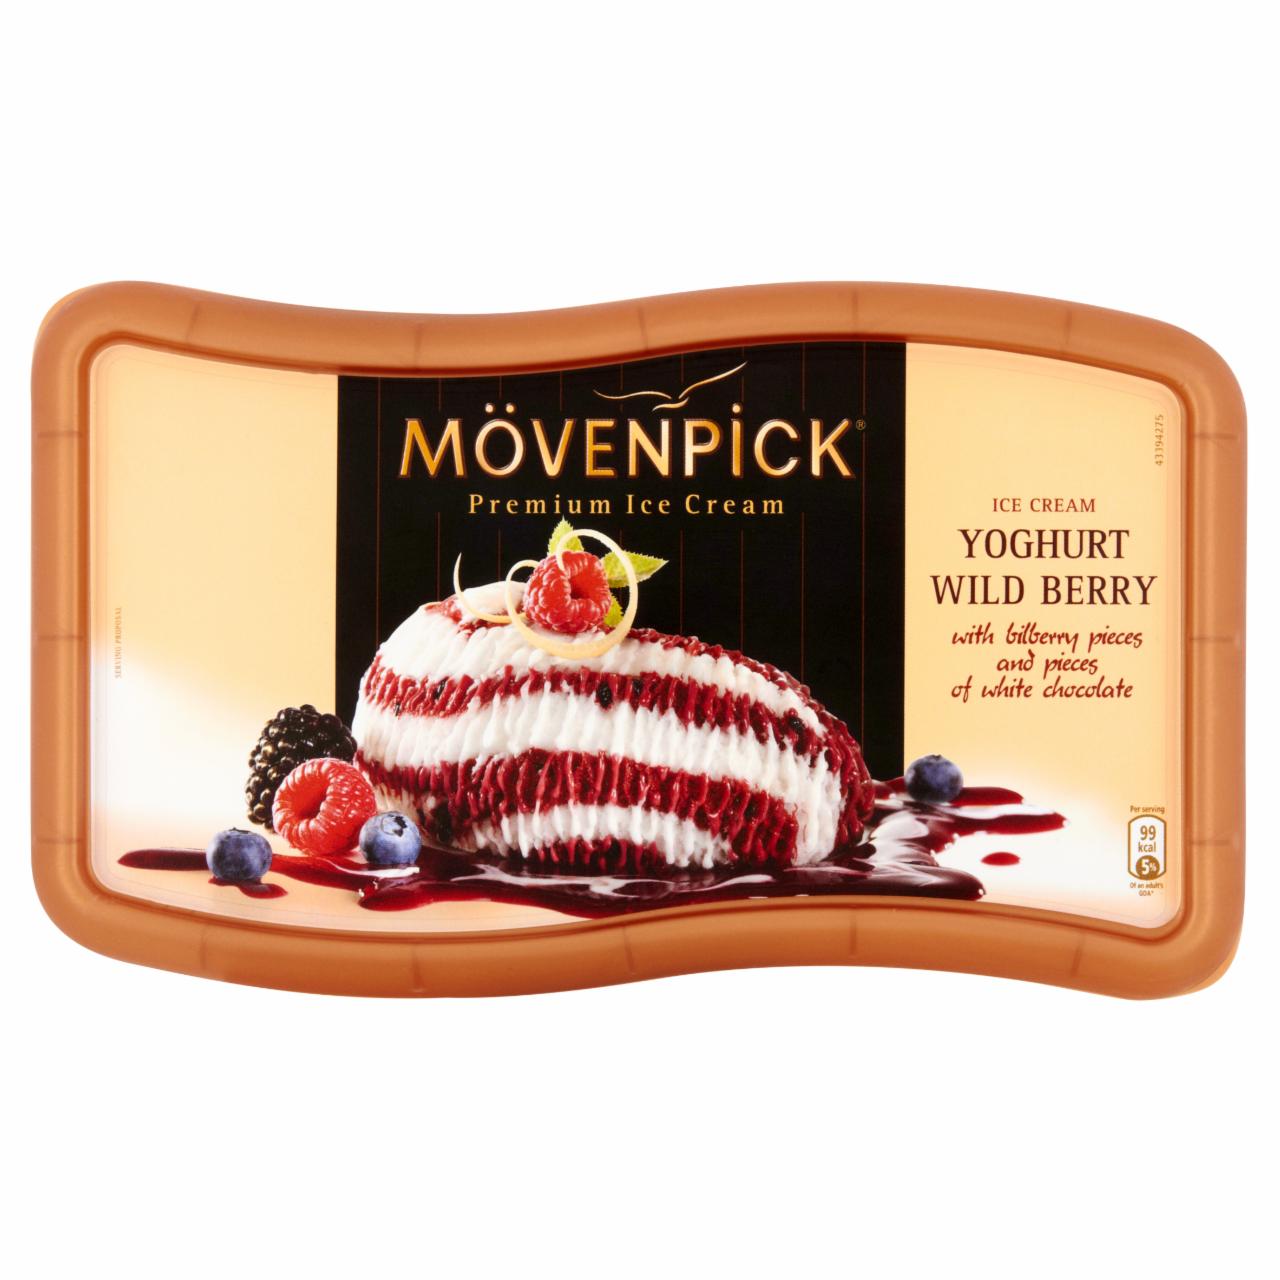 Photo - Mövenpick Yoghurt Willd Berry Ice Cream 900 ml